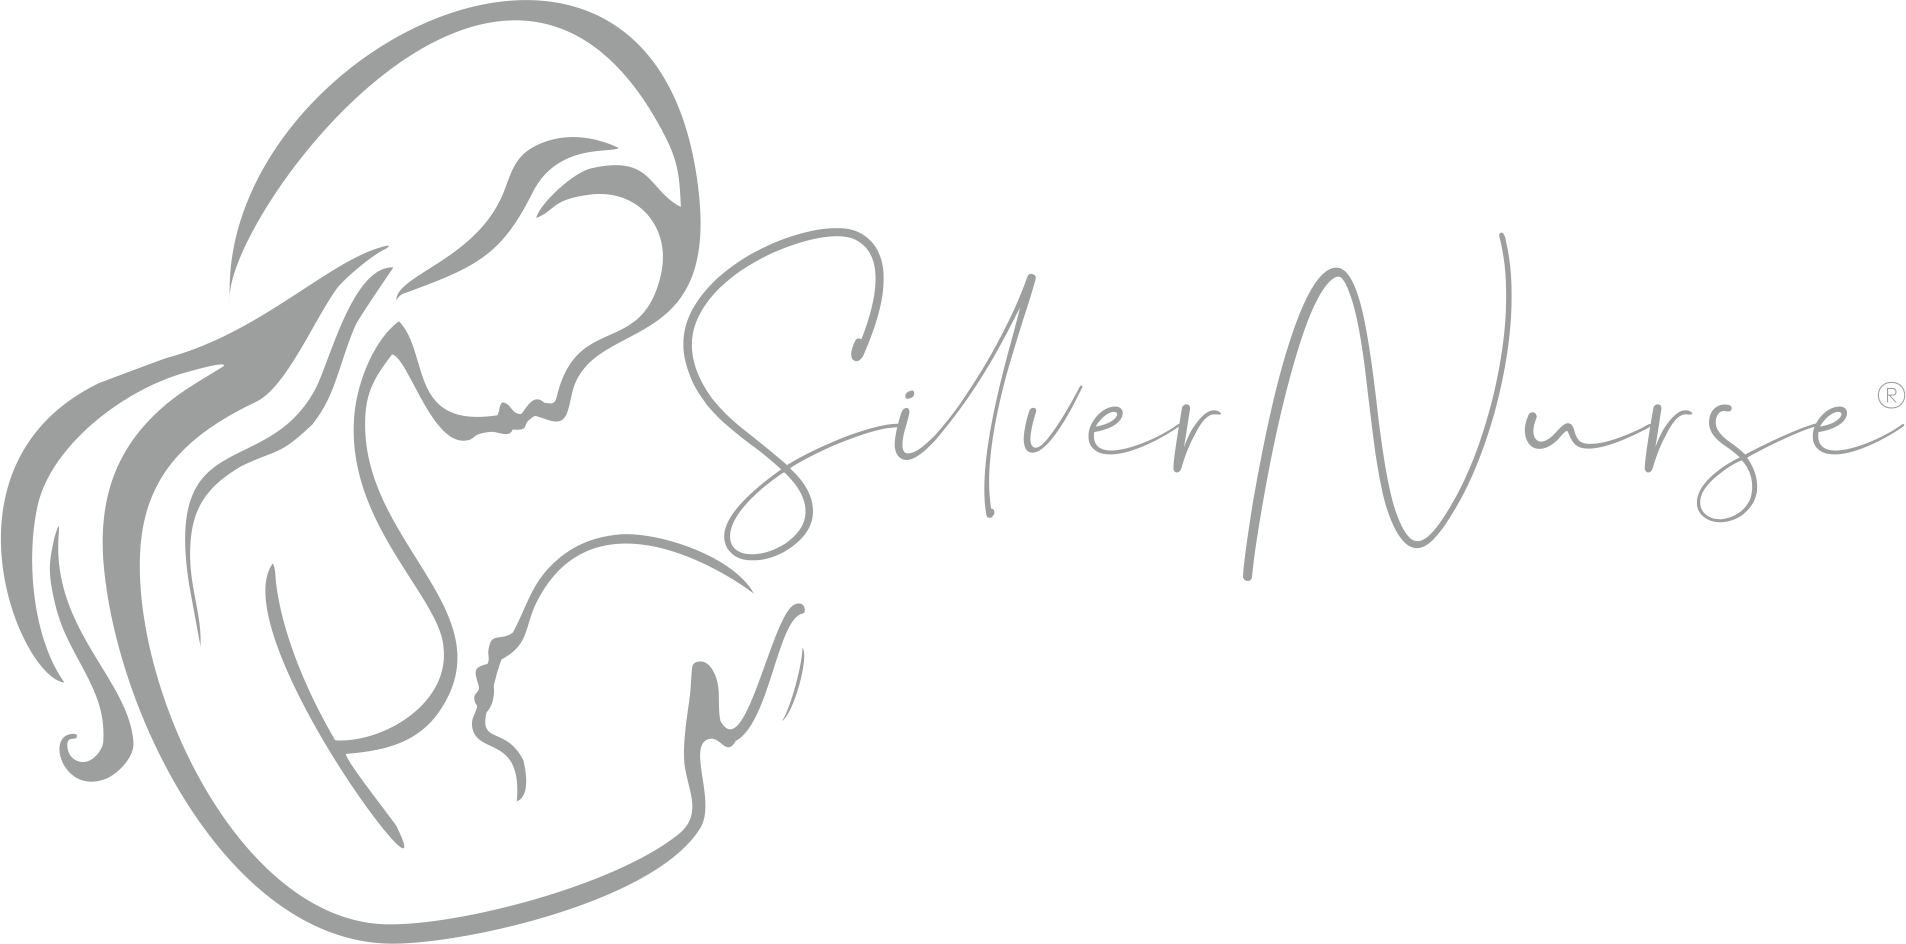 SilverNurse